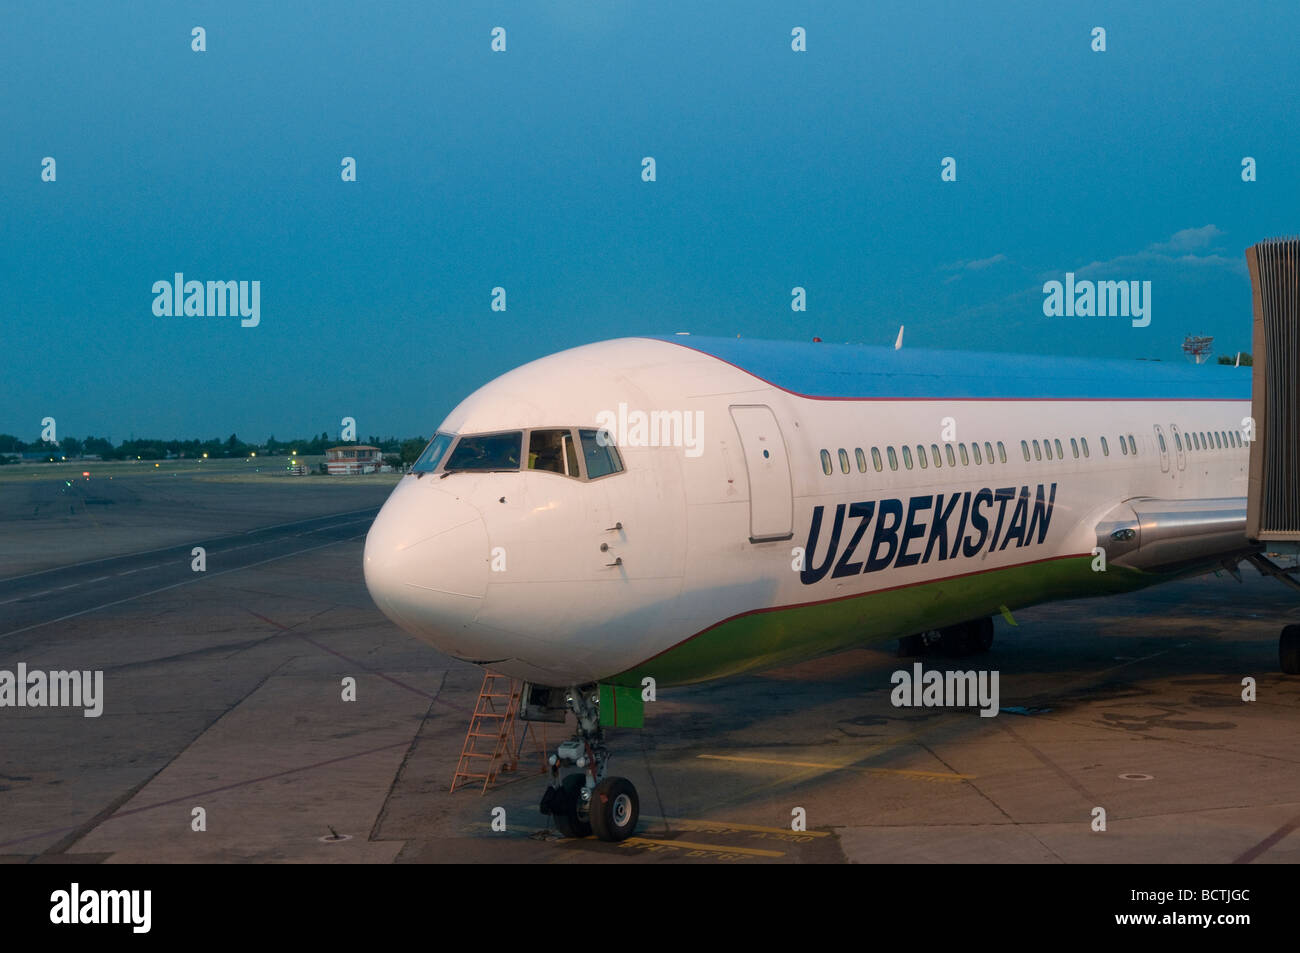 An airplane of National Air Company Uzbekistan Airways stands on the tarmac at Tashkent International Airport Uzbekistan Stock Photo